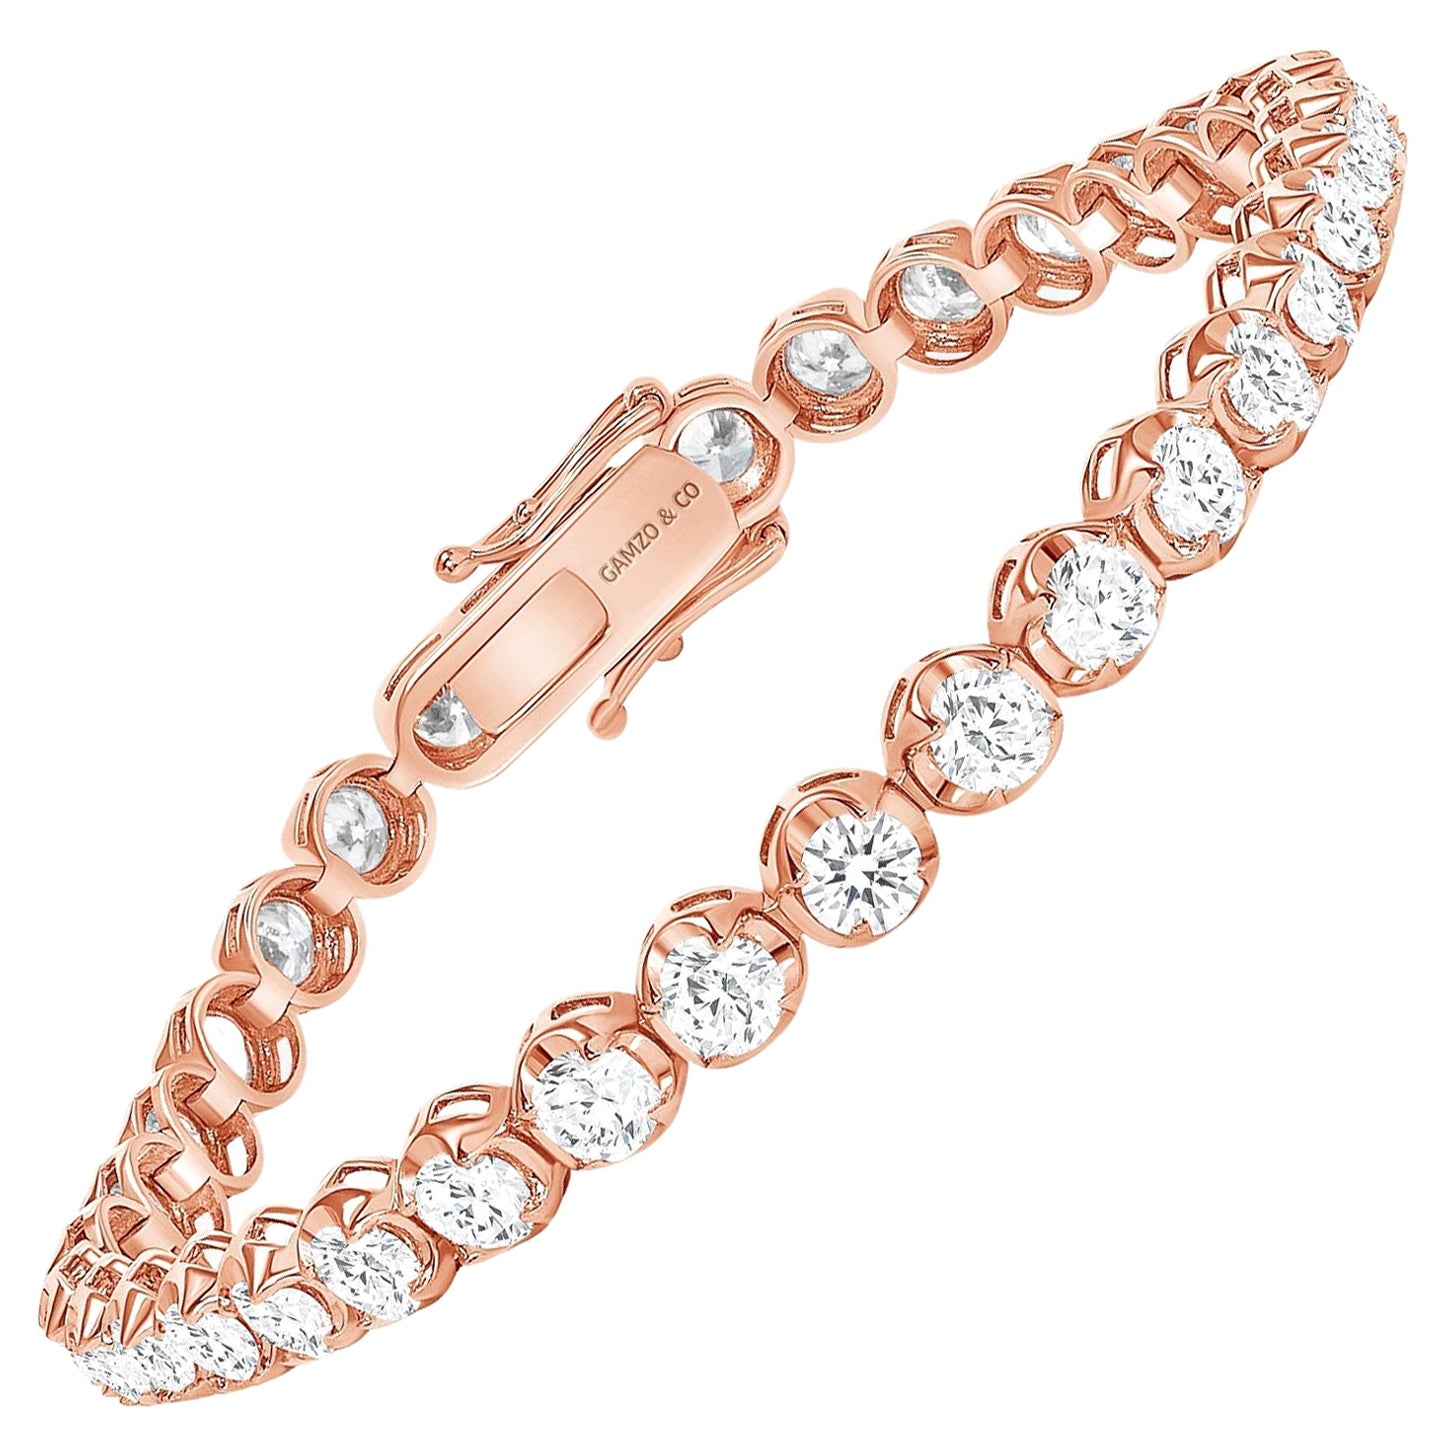 7 Inch 14k Rose Gold 5 Carat Round Diamond Illusion Setting Tennis Bracelet